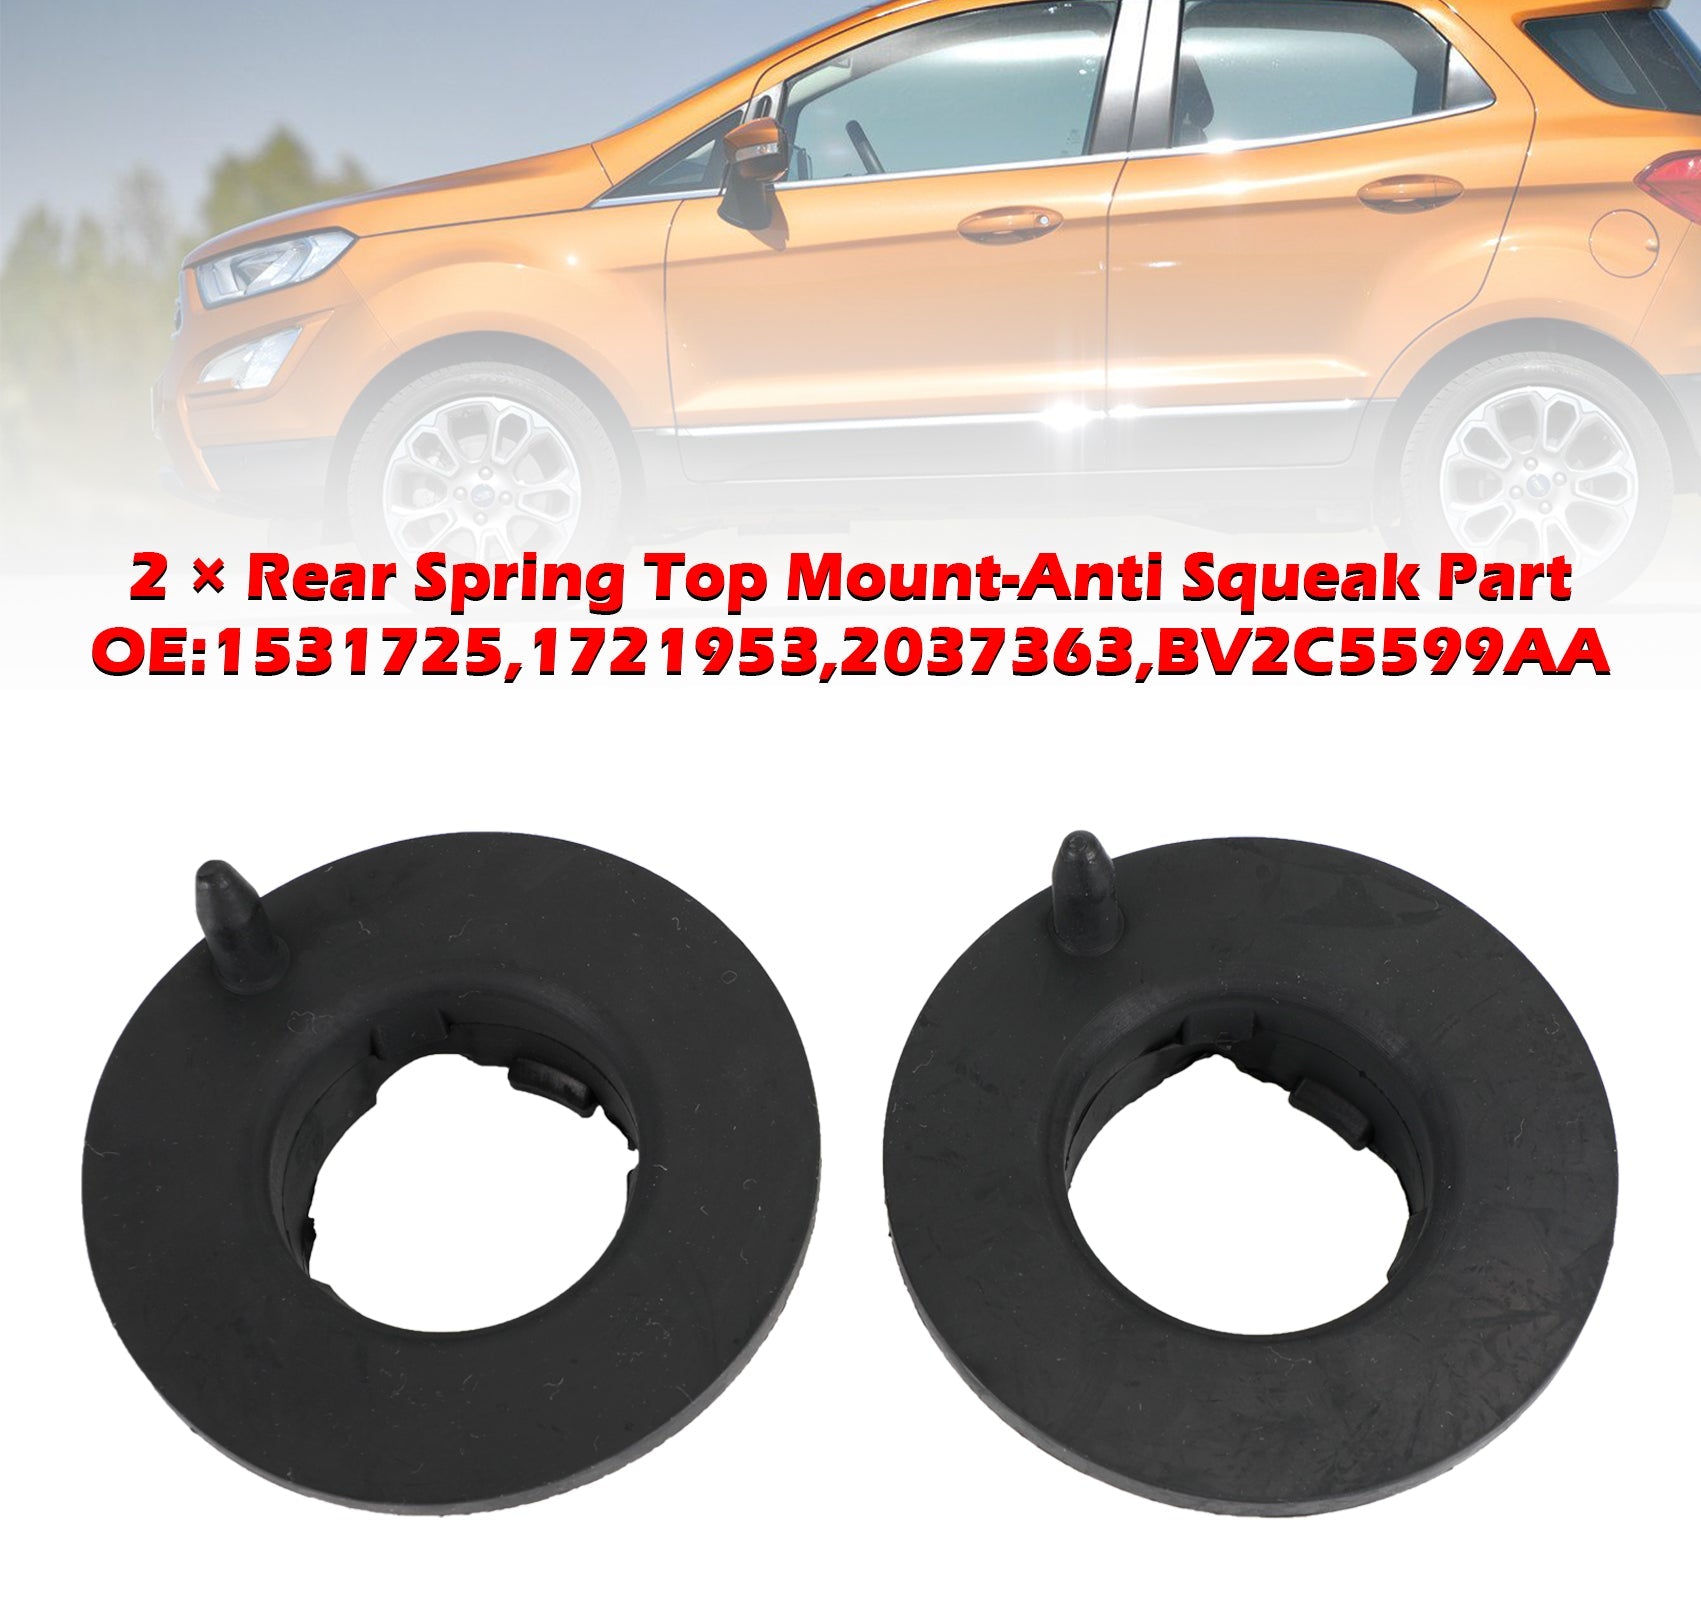 2 X Rear Spring Top Mount-Anti Squeak Part for Ford Fiesta Mk7 09-17 1531725